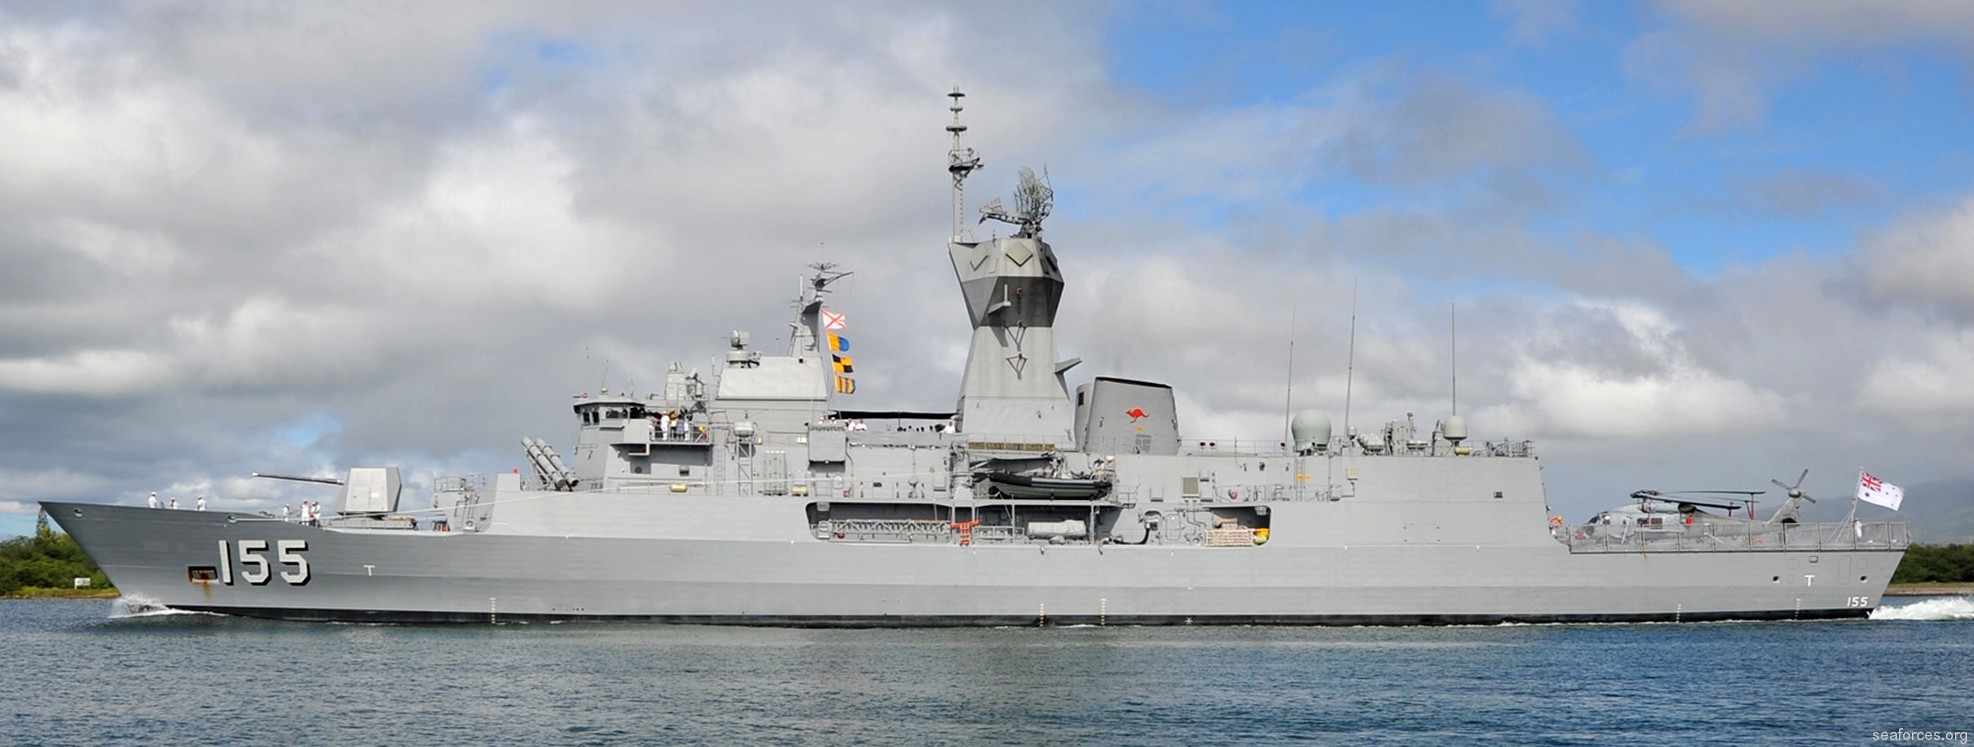 ffh-155 hms ballarat anzac class frigate royal australian navy 2016 20 pearl harbor hawaii